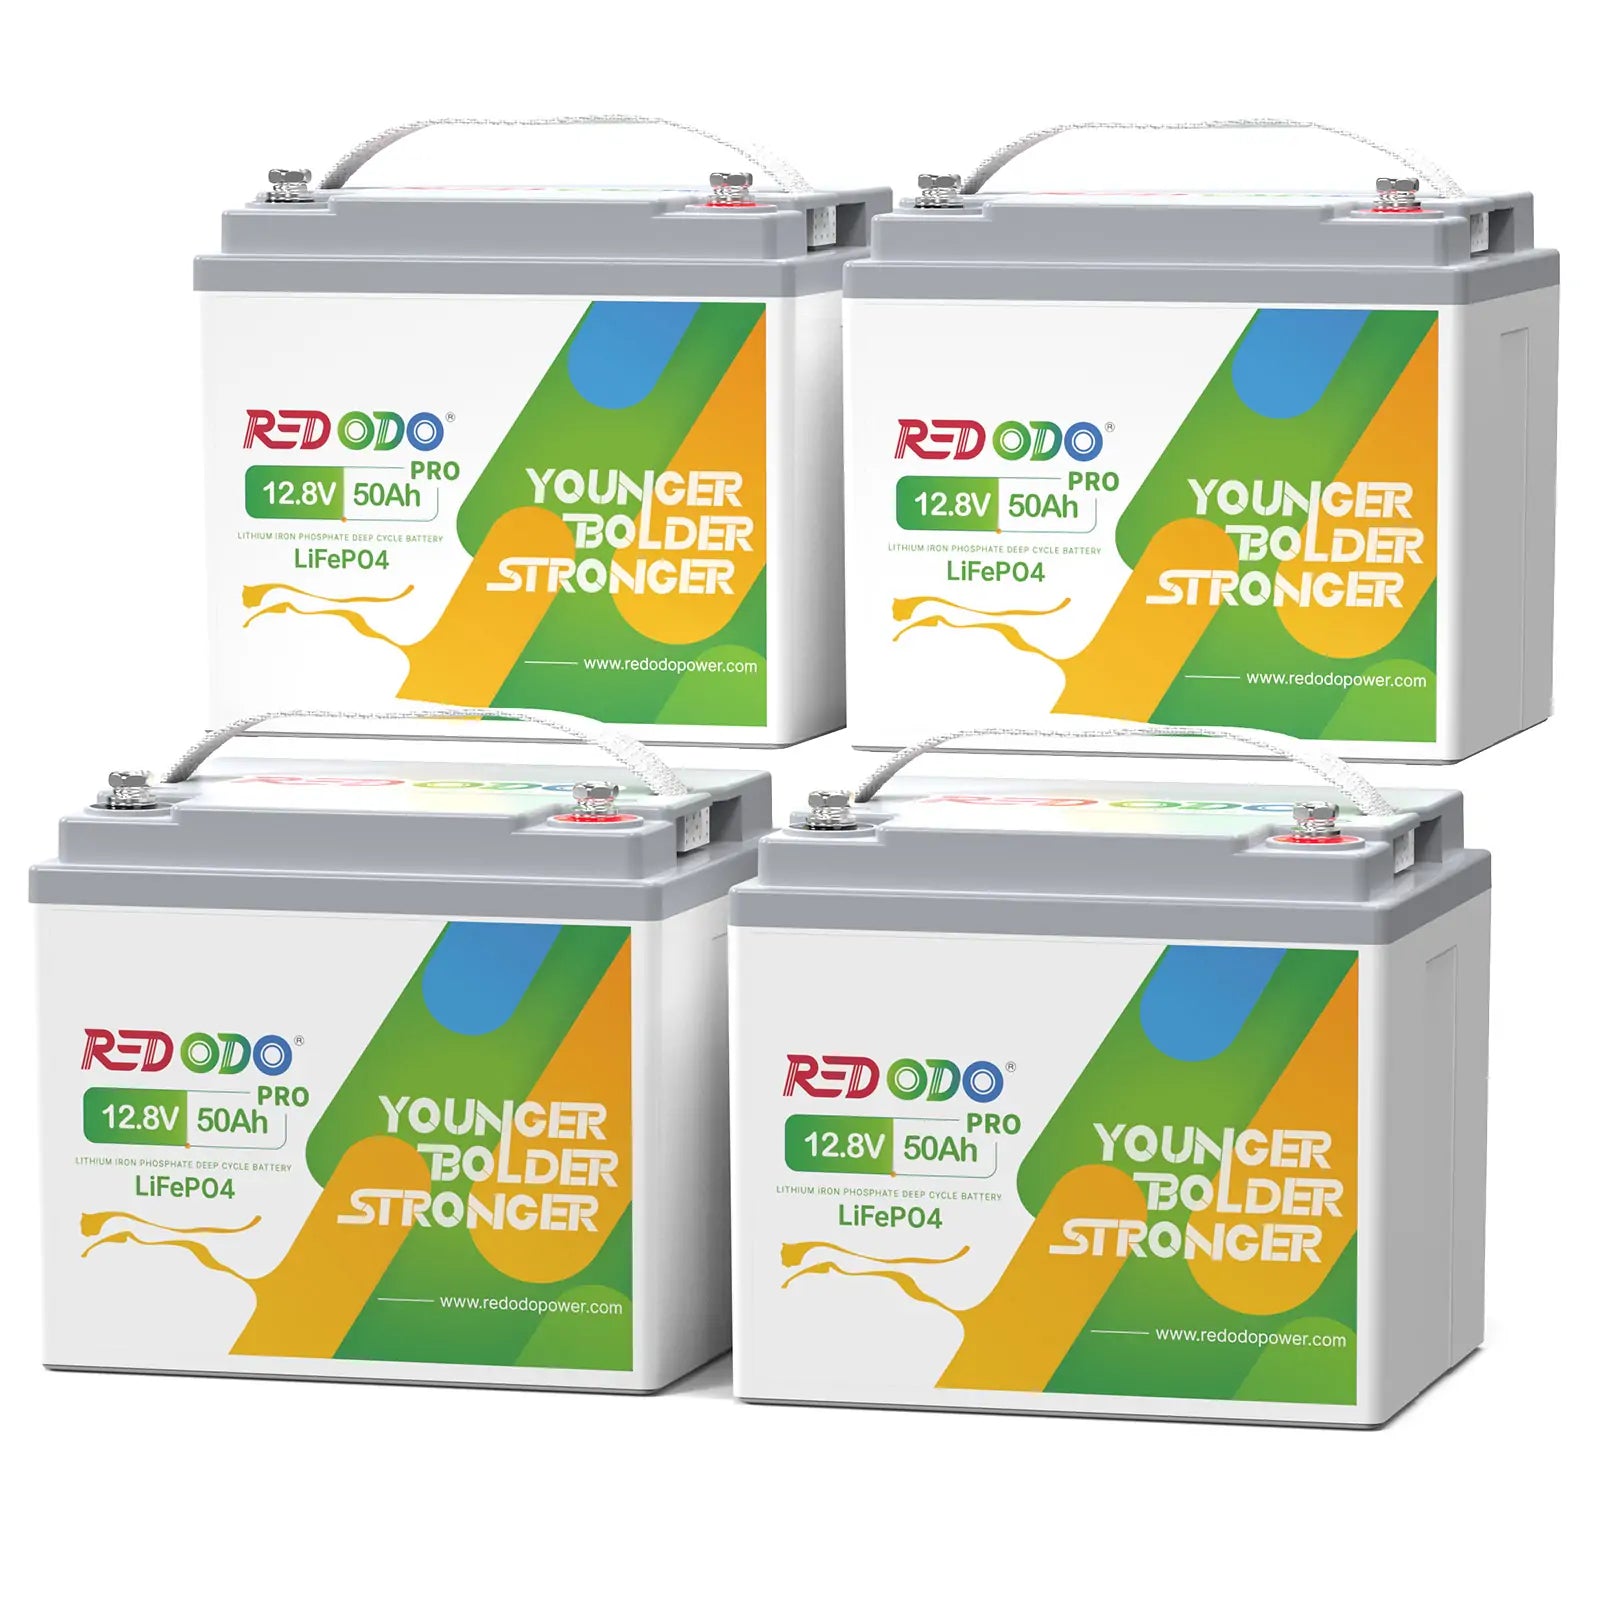 Redodo 12V 50Ah Lithium Battery: Portable Lightweight Power Bank